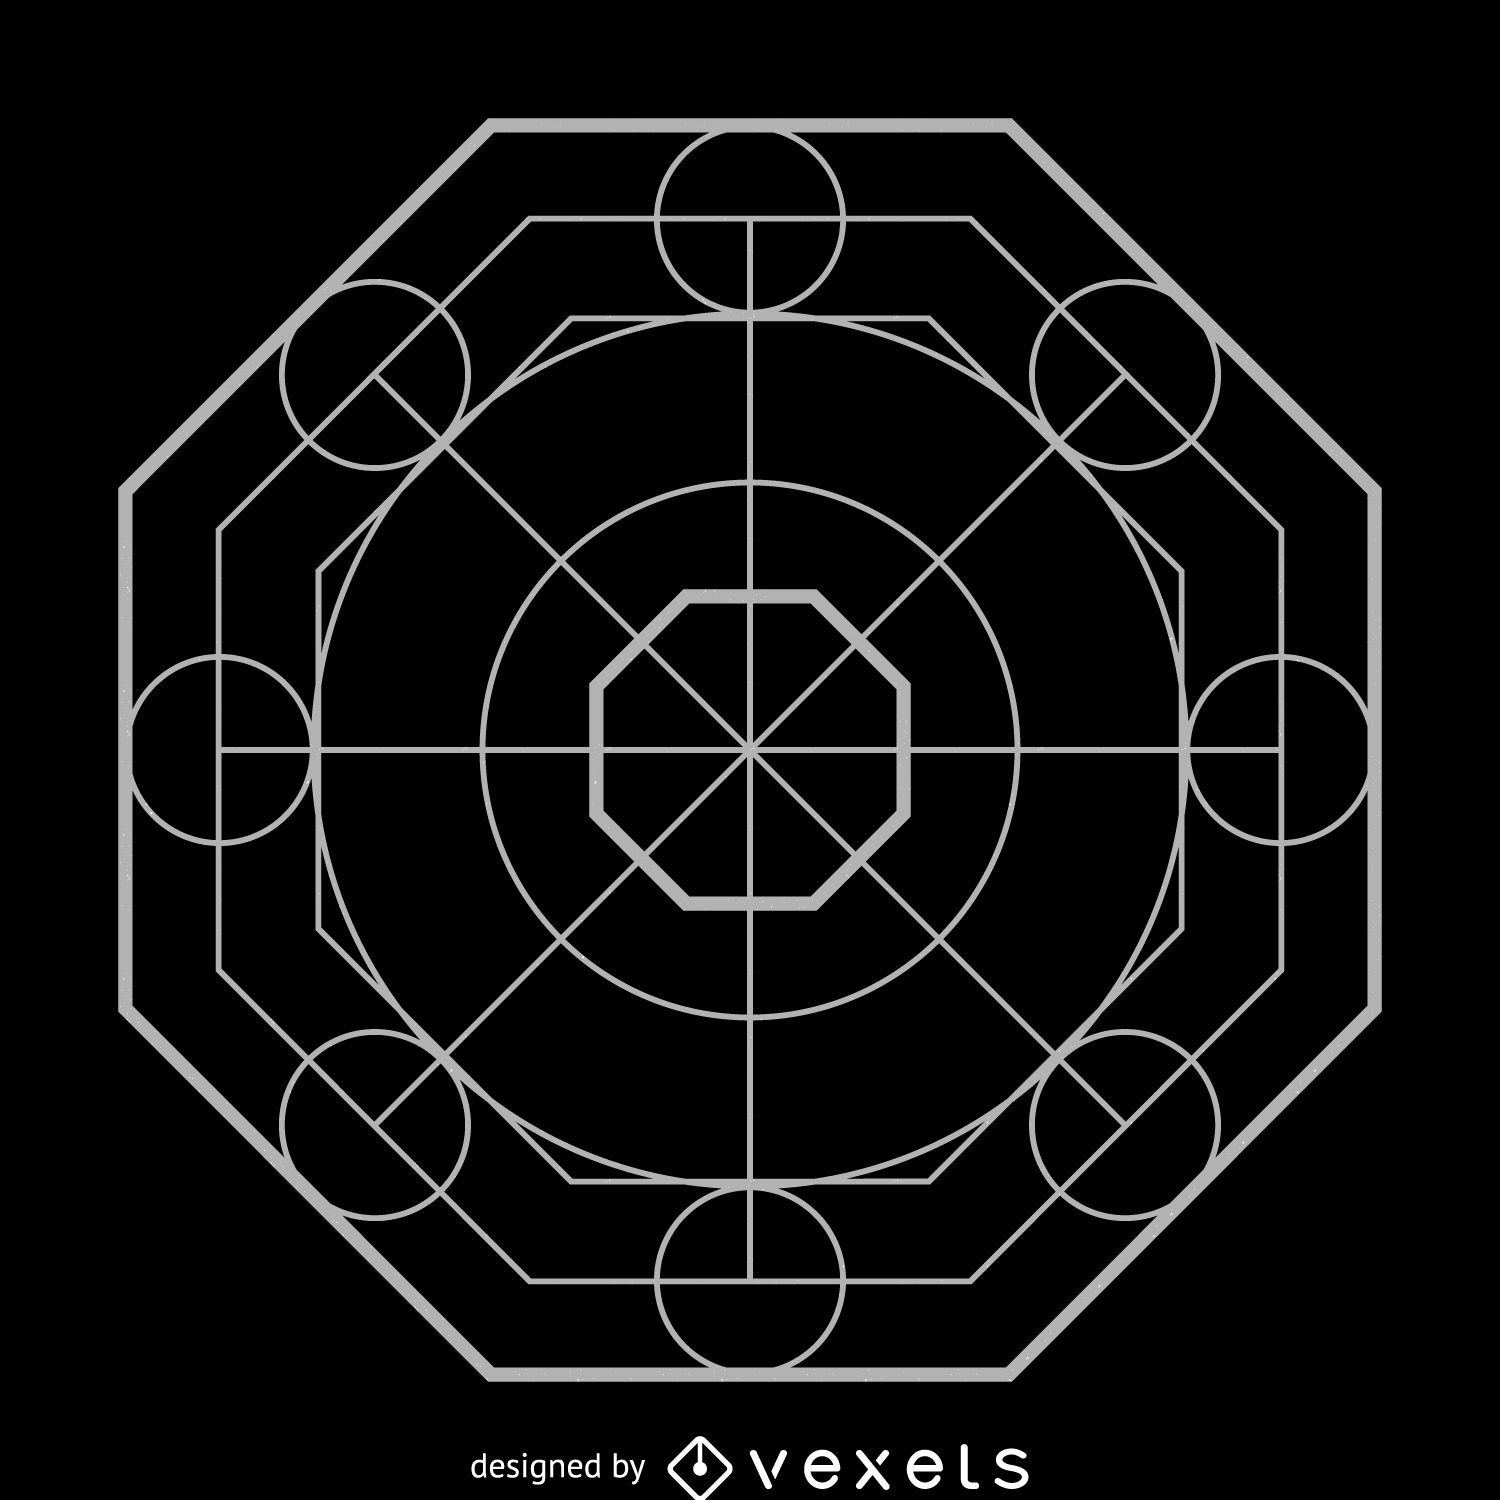 Complex octagon sacred geometry design